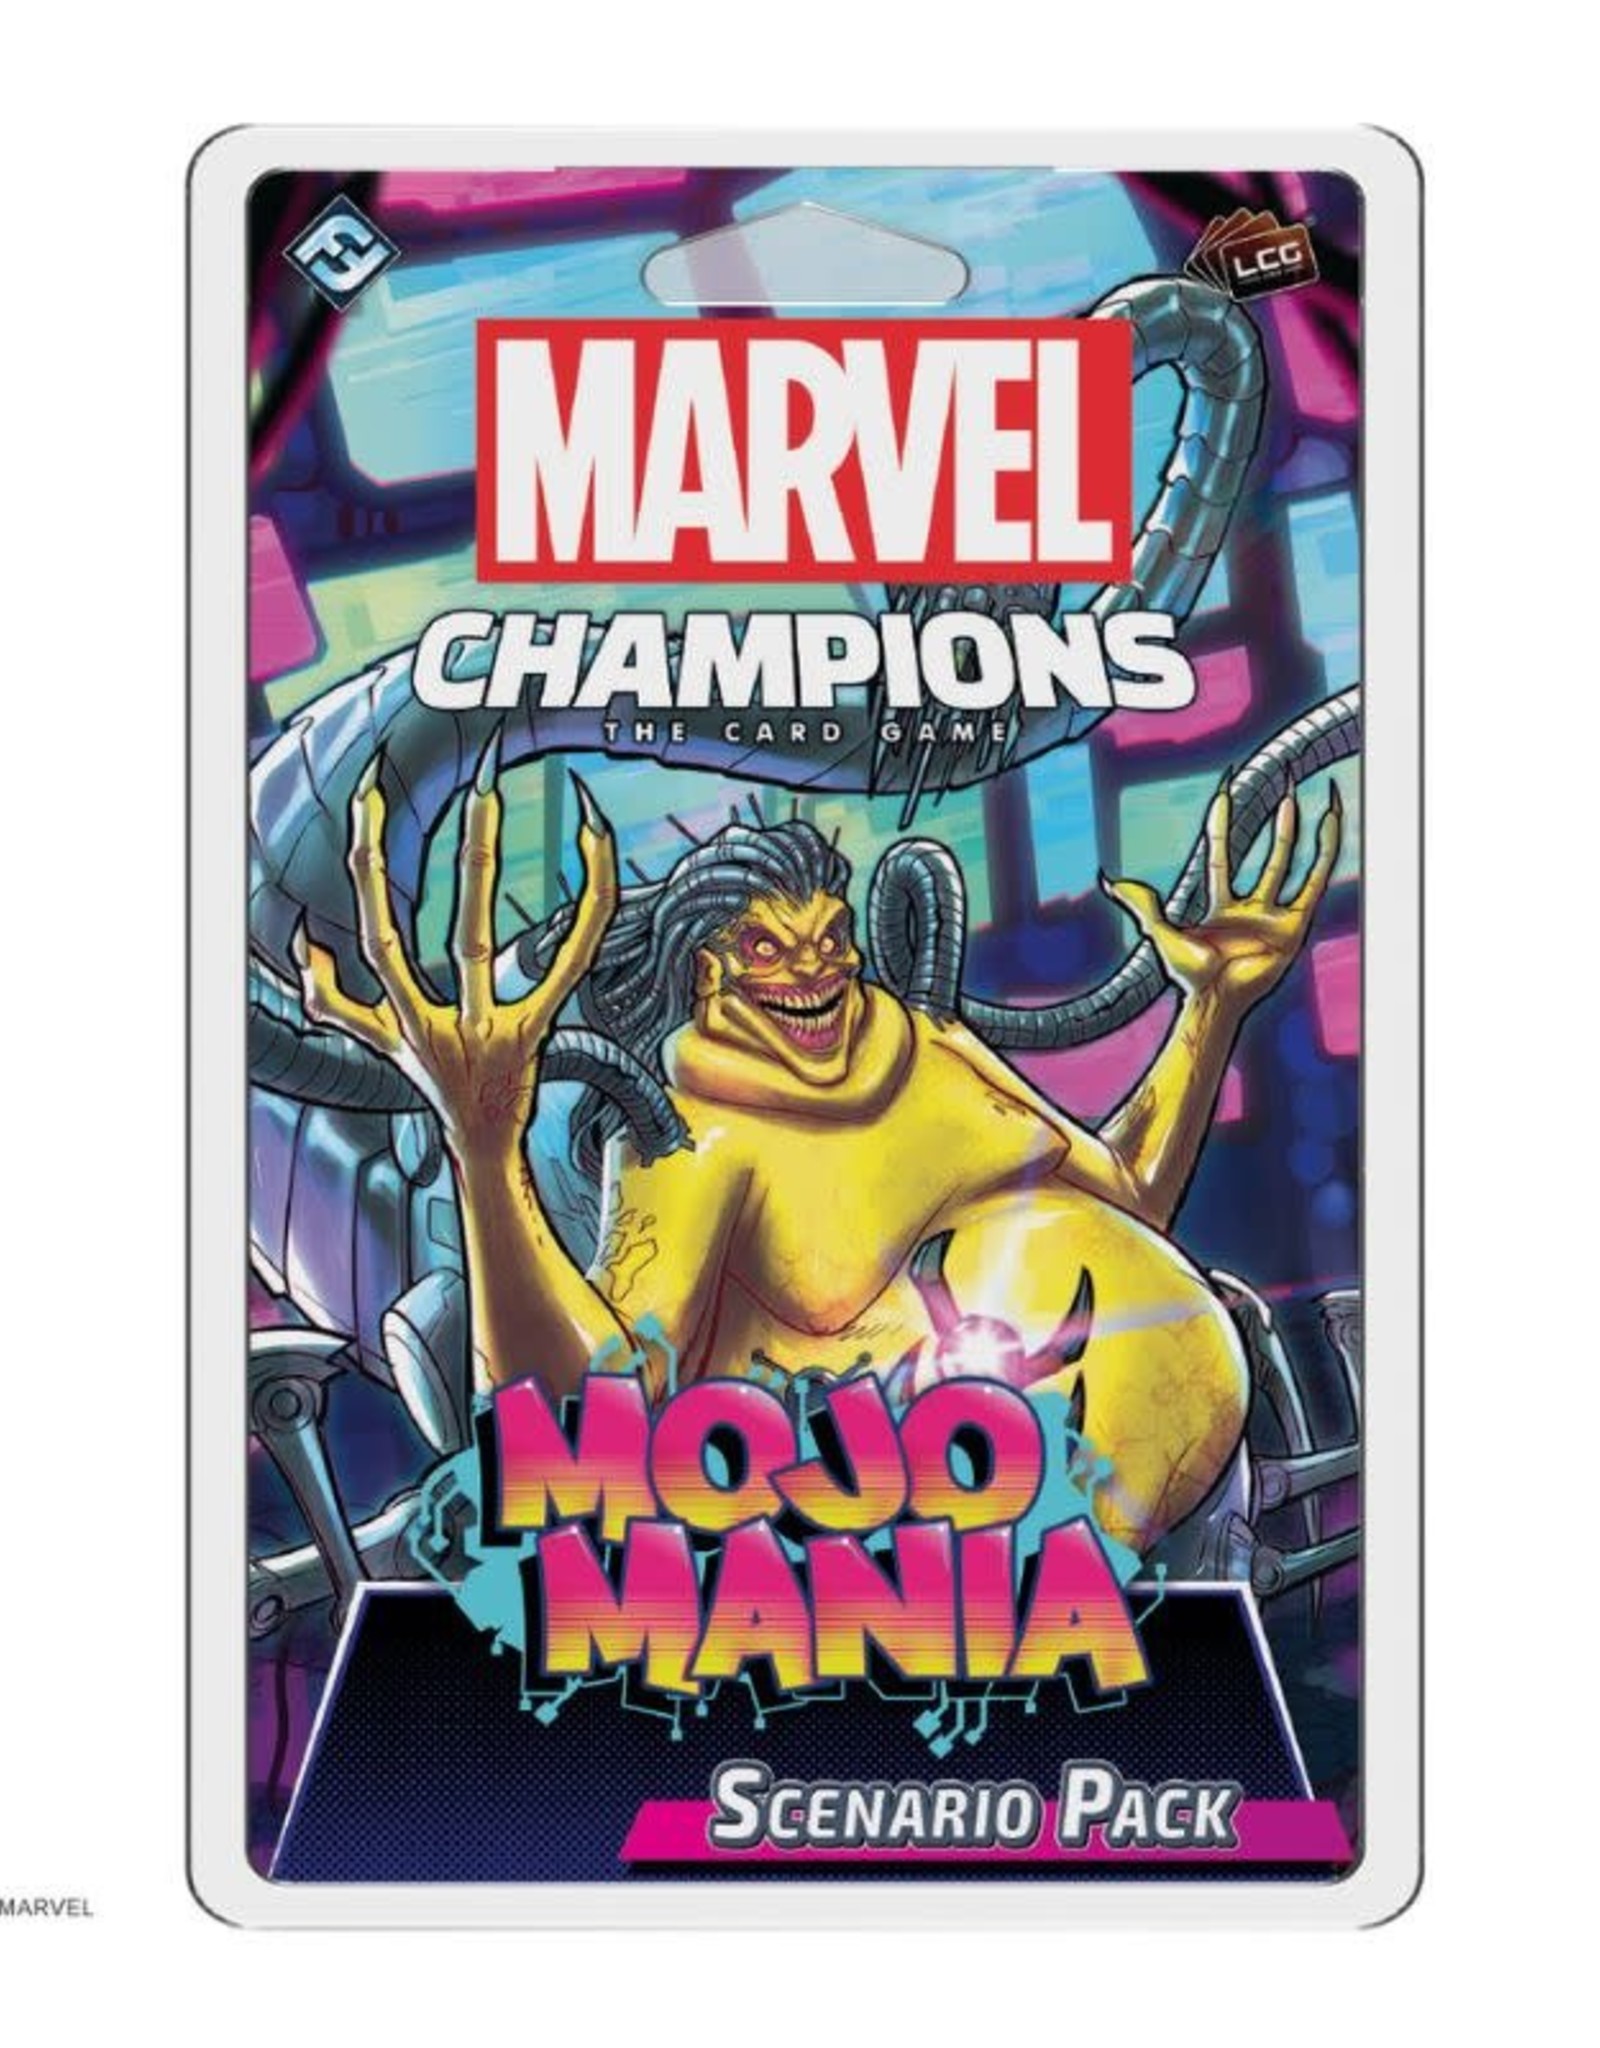 Marvel Champions LCG: Scenario Pack - Mojomania